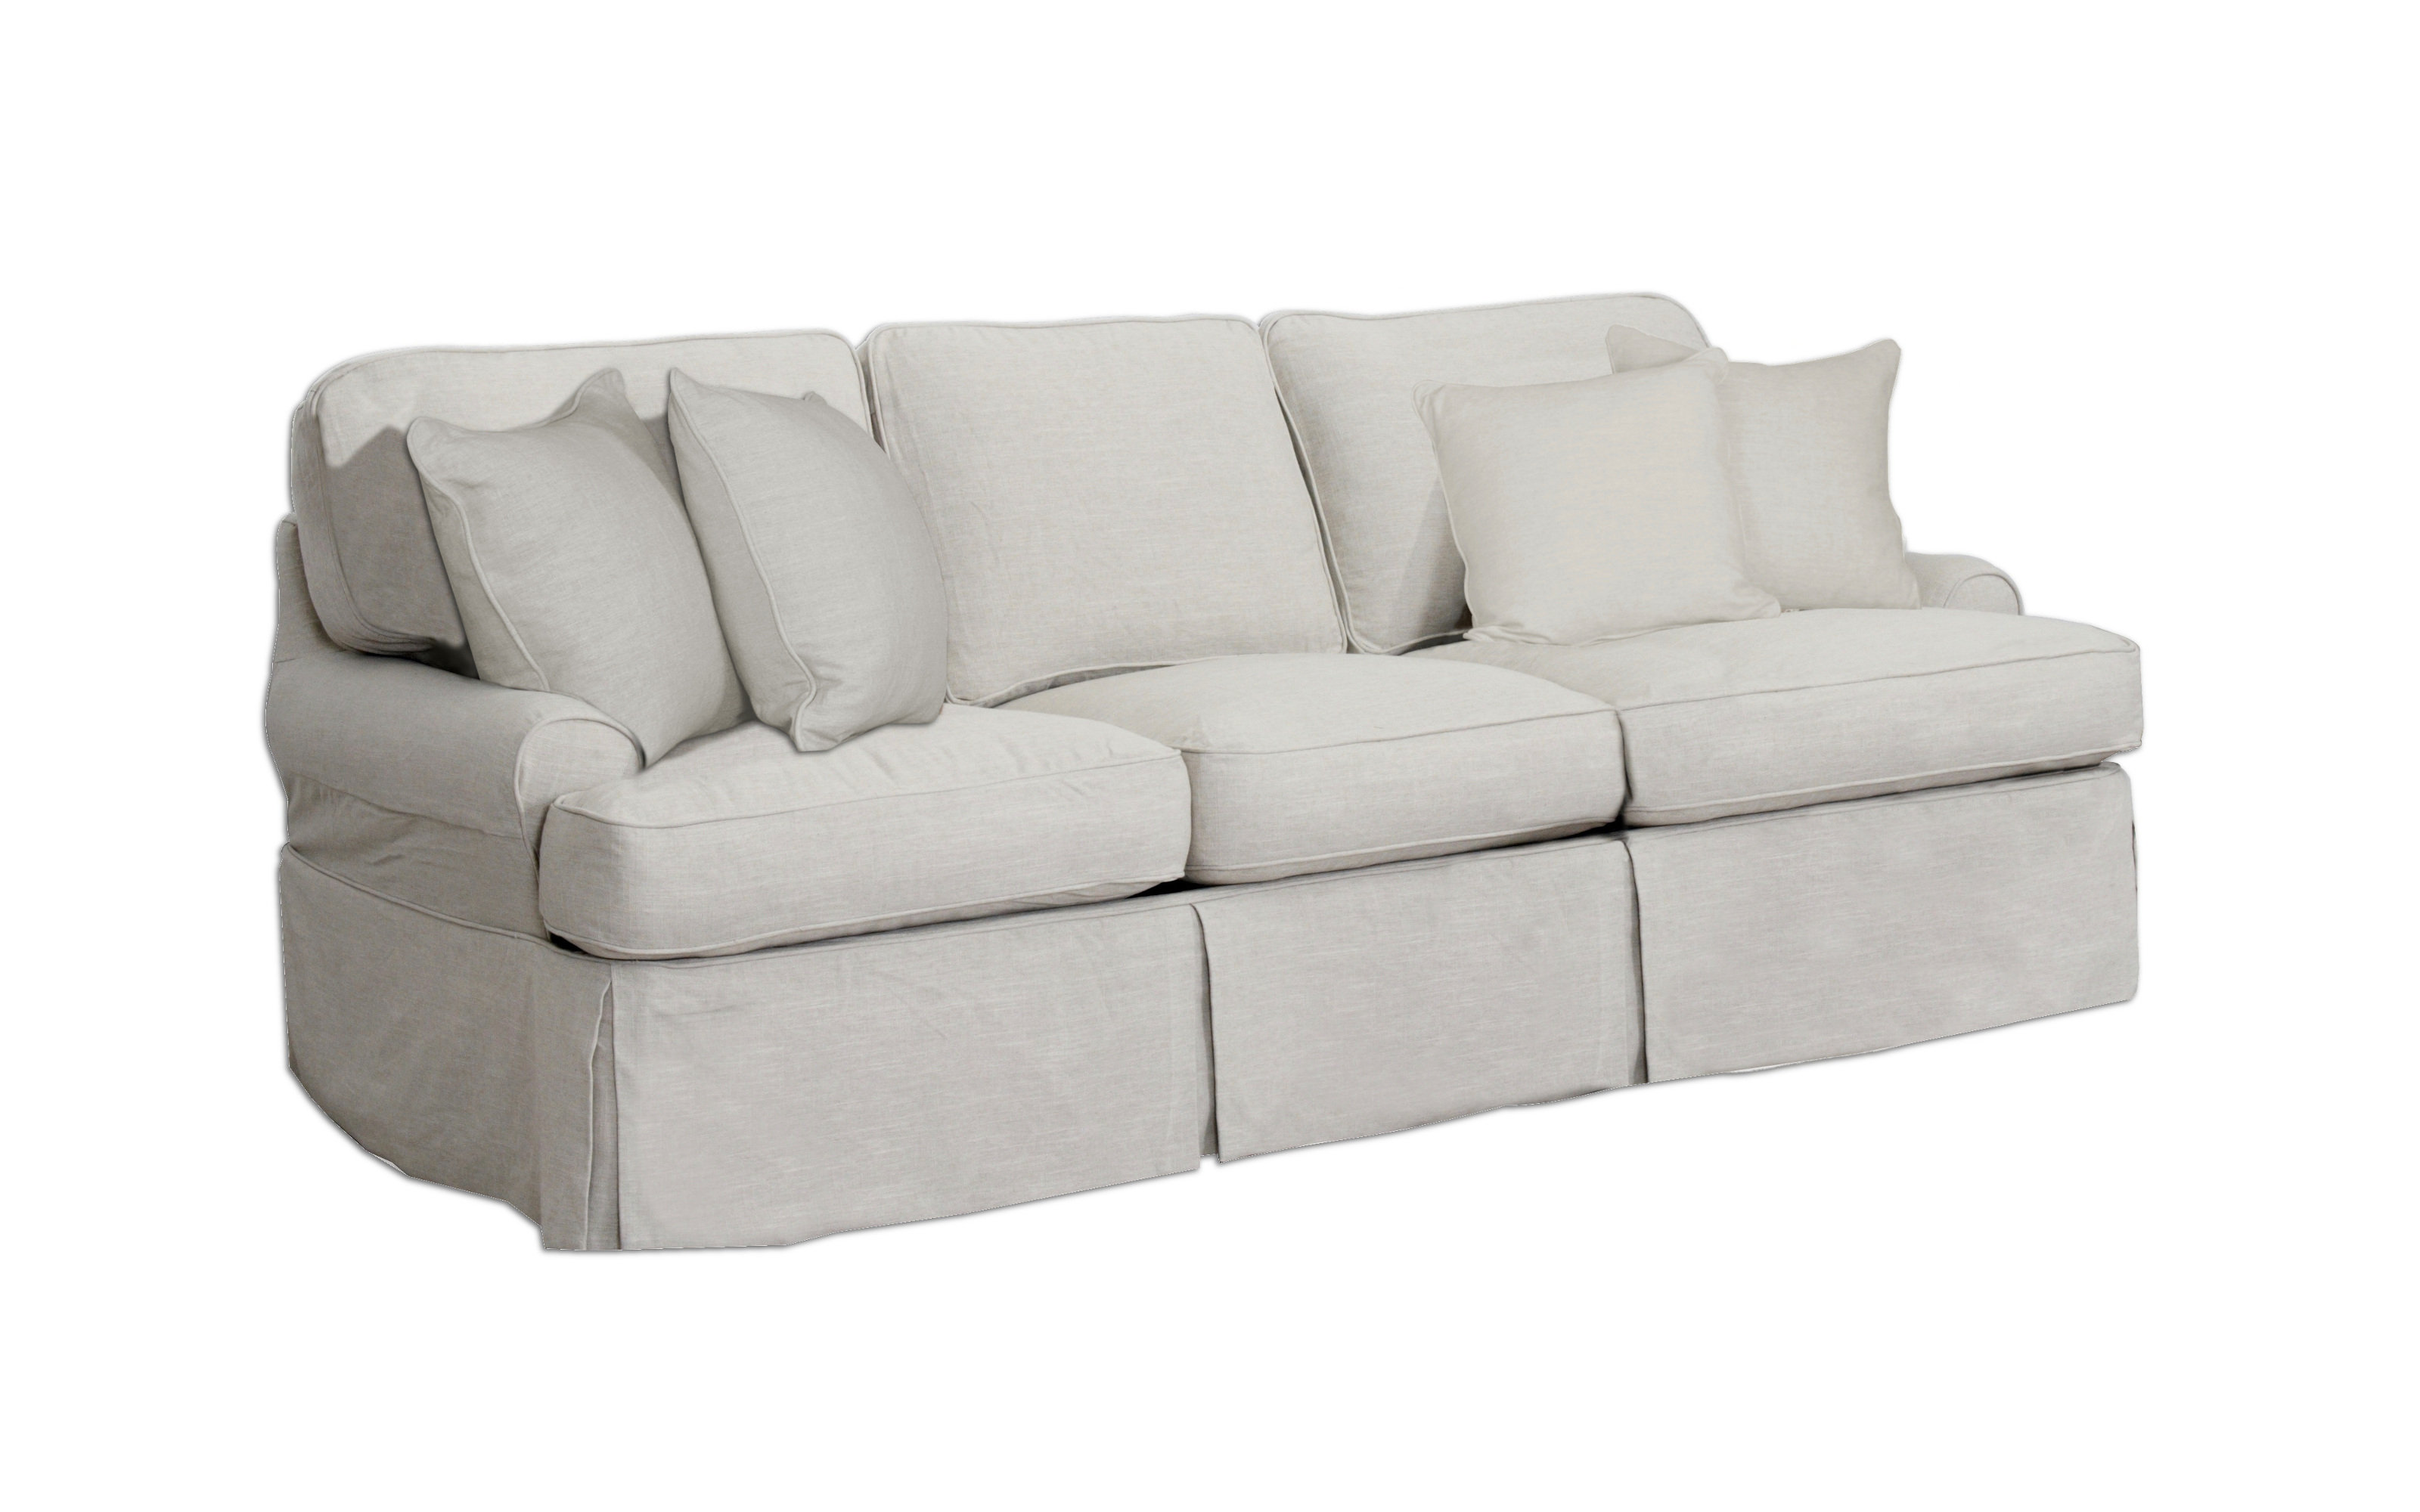 t cushion sofa slipcovers xl